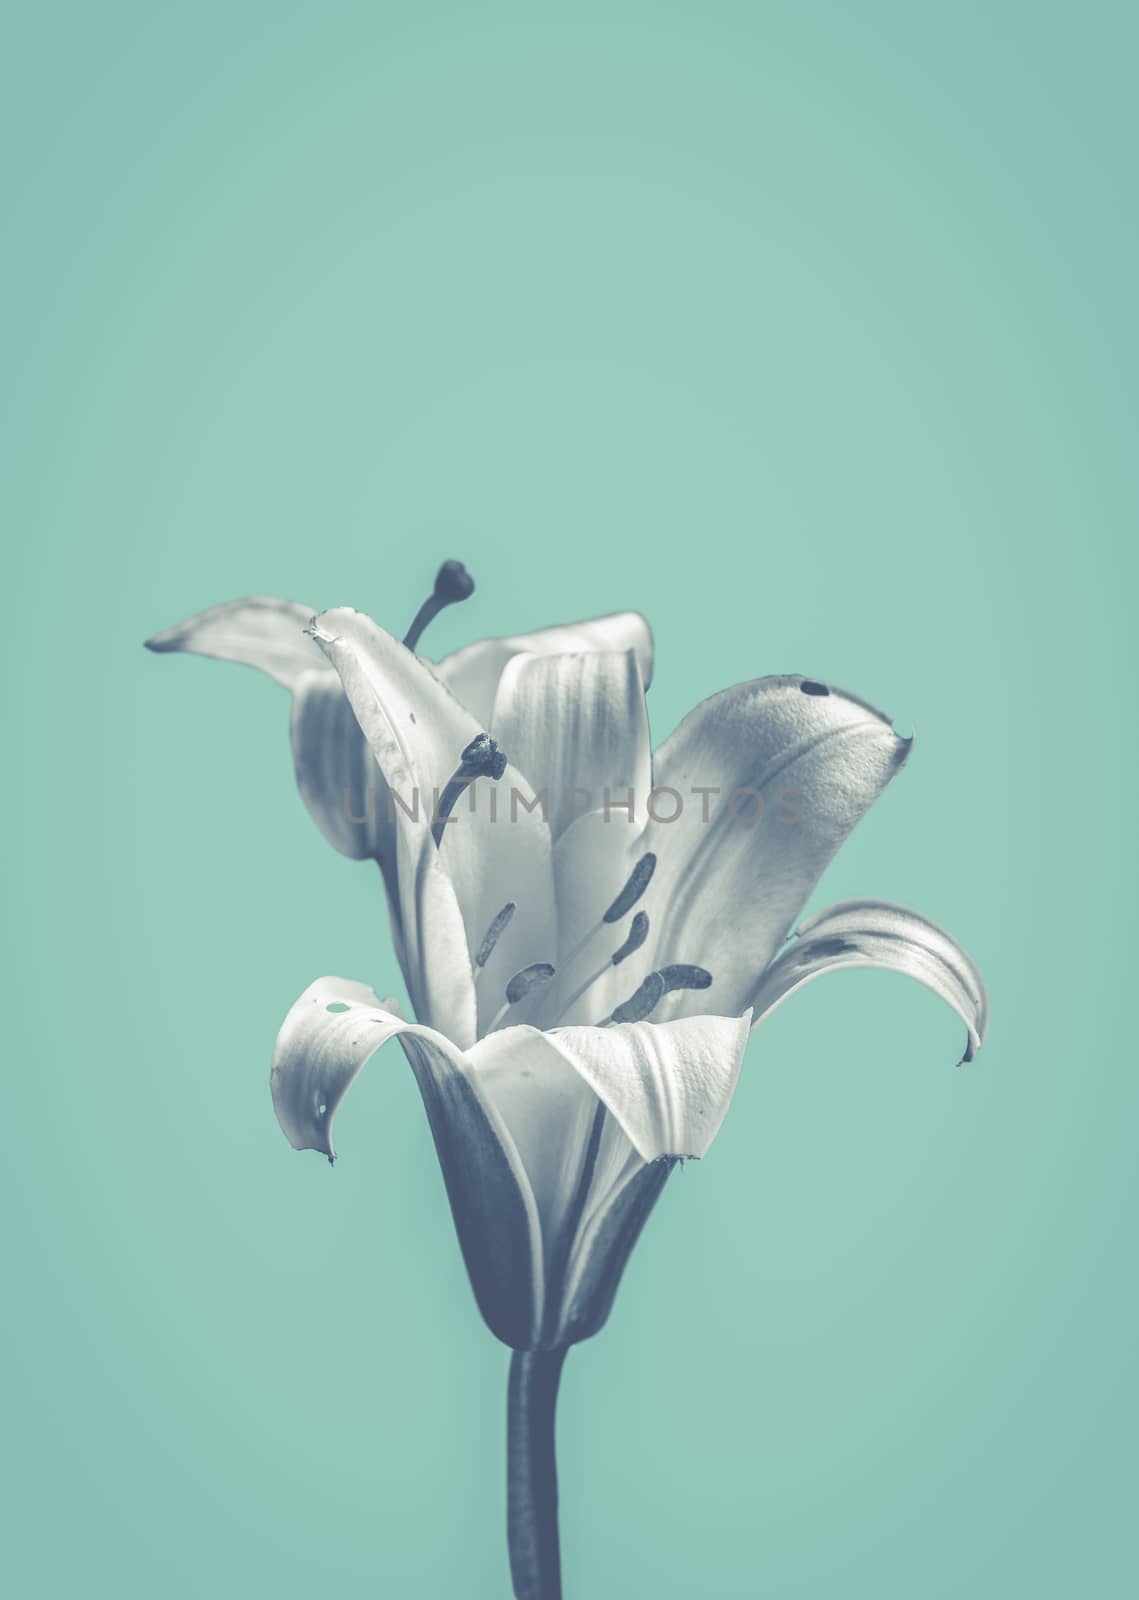 Flower On Blue Design by mrdoomits